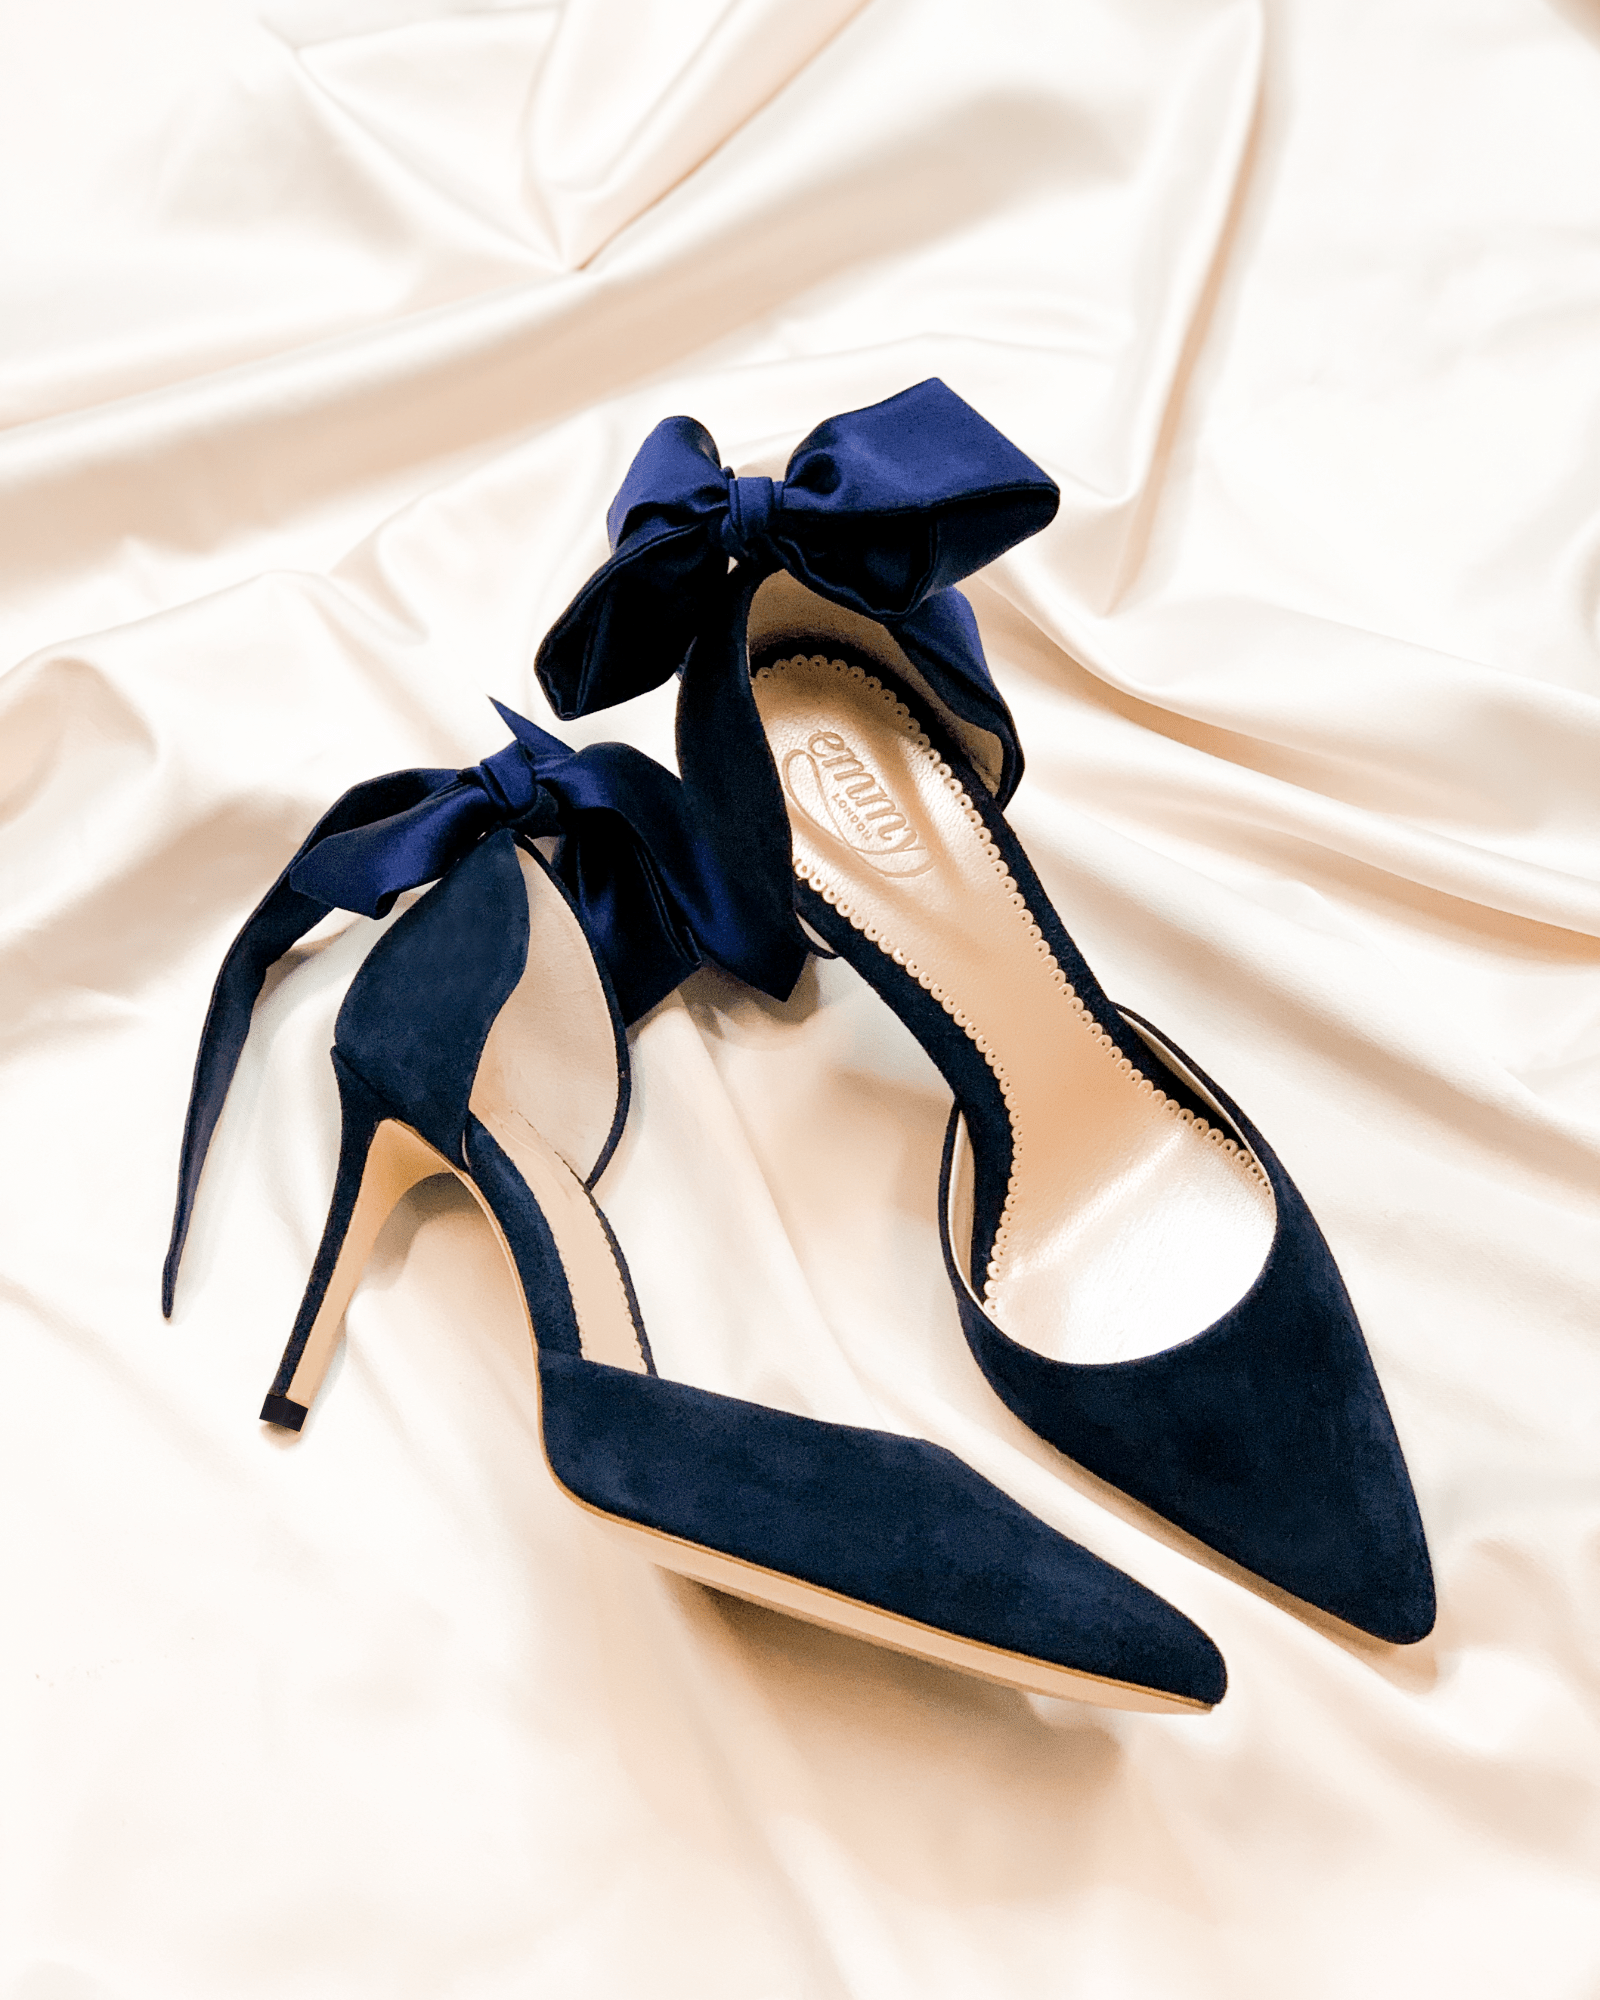 Harriet Mid Heel Fashion Shoe Navy Blue Suede Court Shoes  image